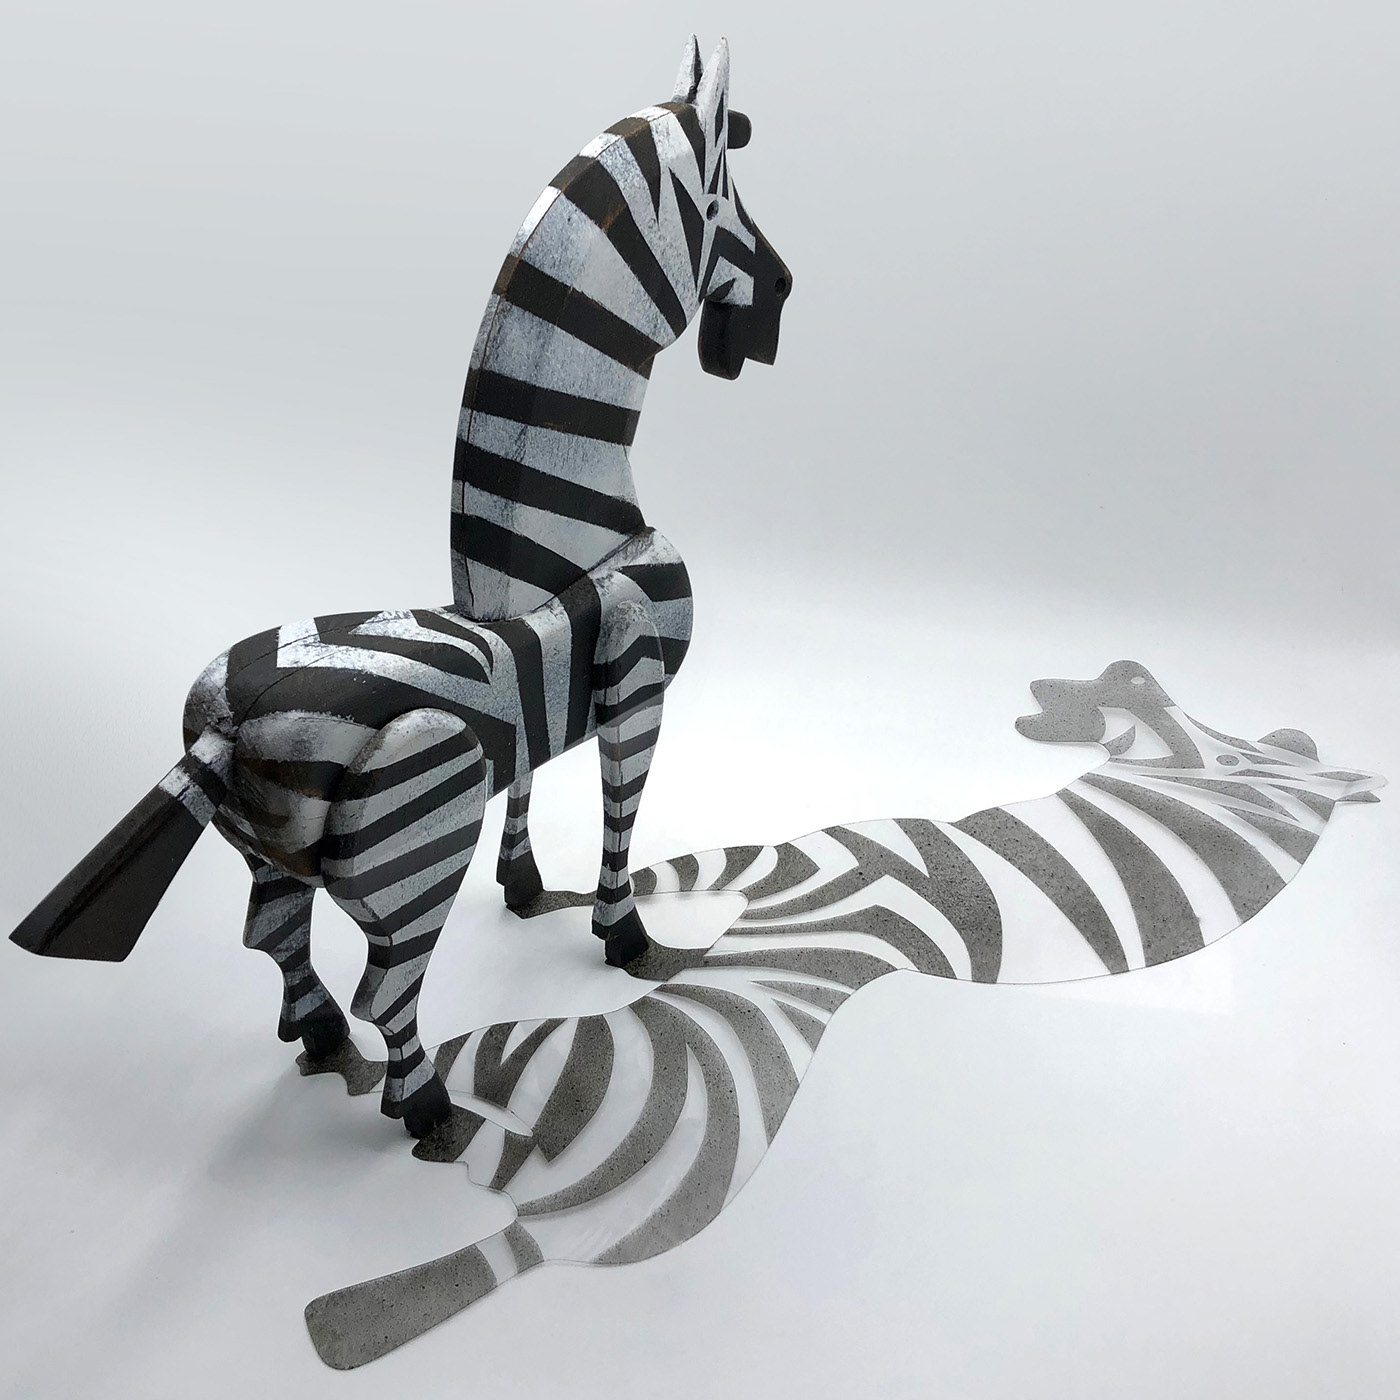 concept concept art conceptual sculpture wood zebra